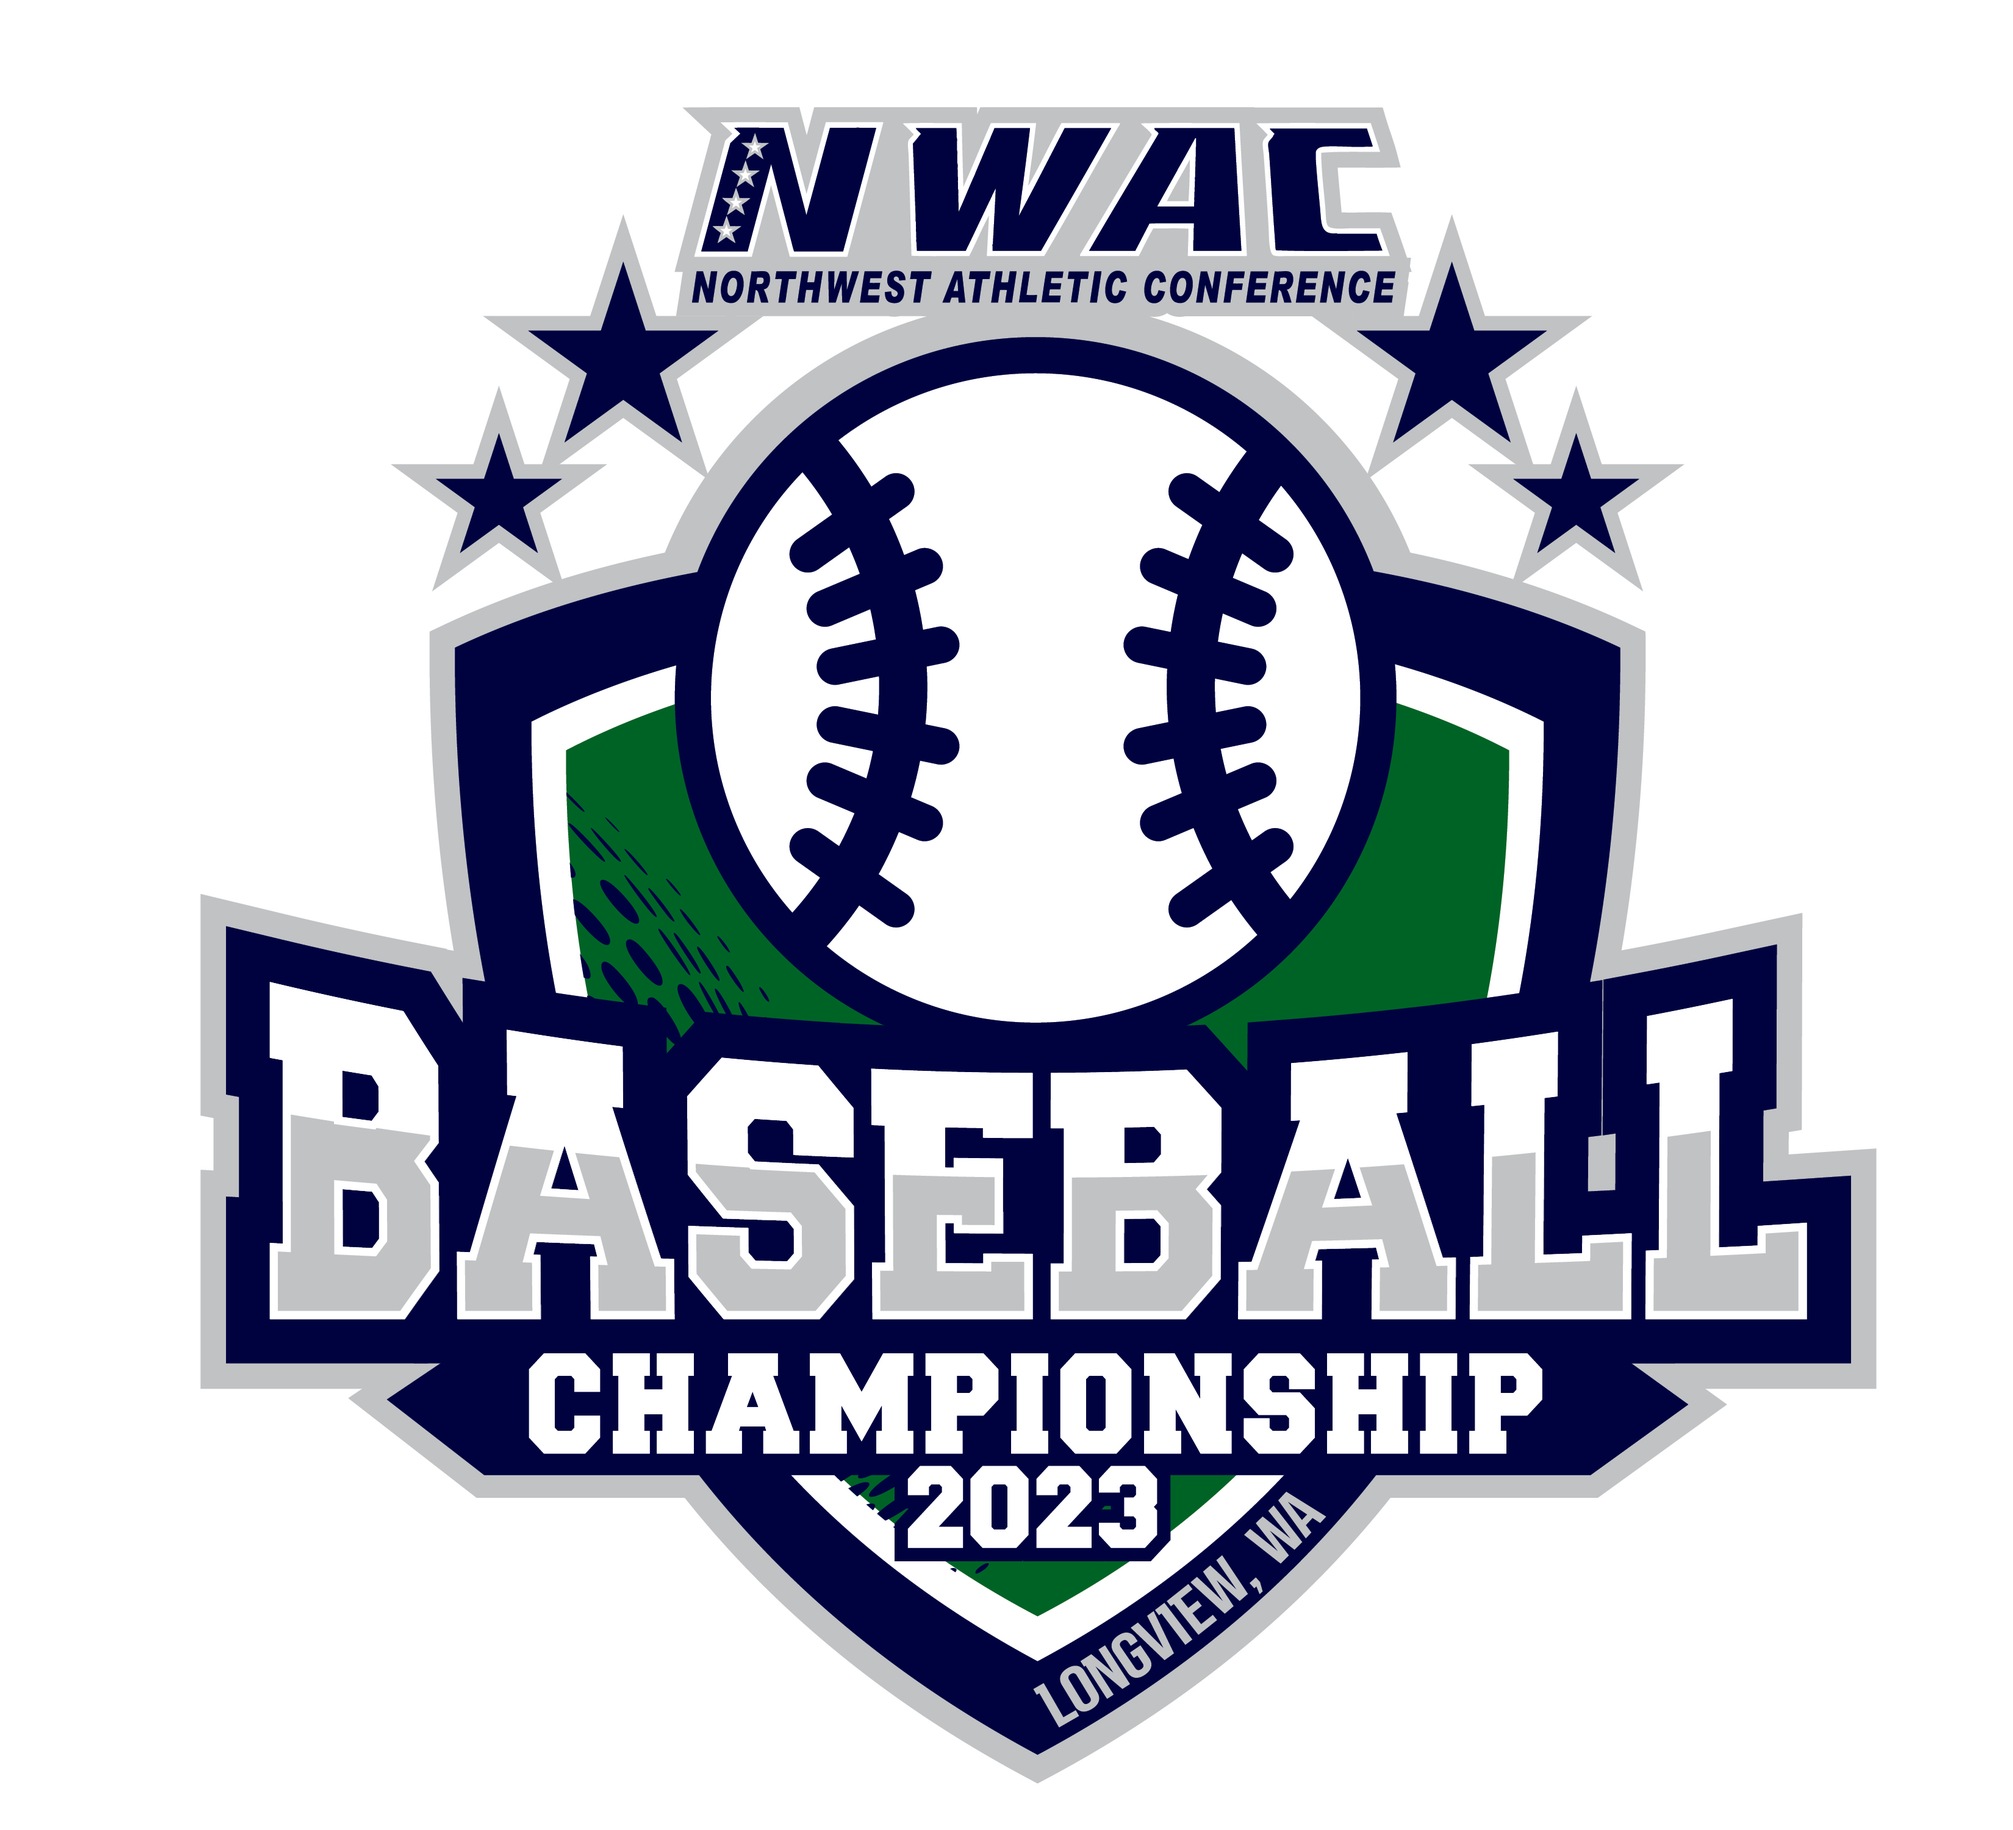 Baseball Championship logo